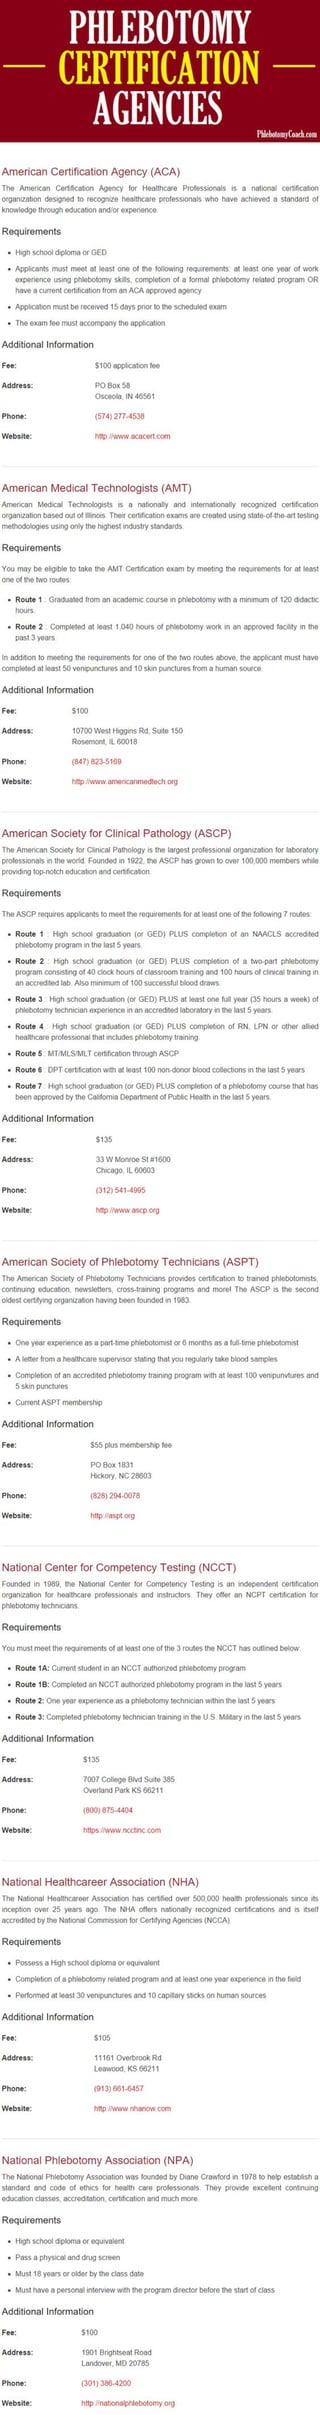 Phlebotomy certification